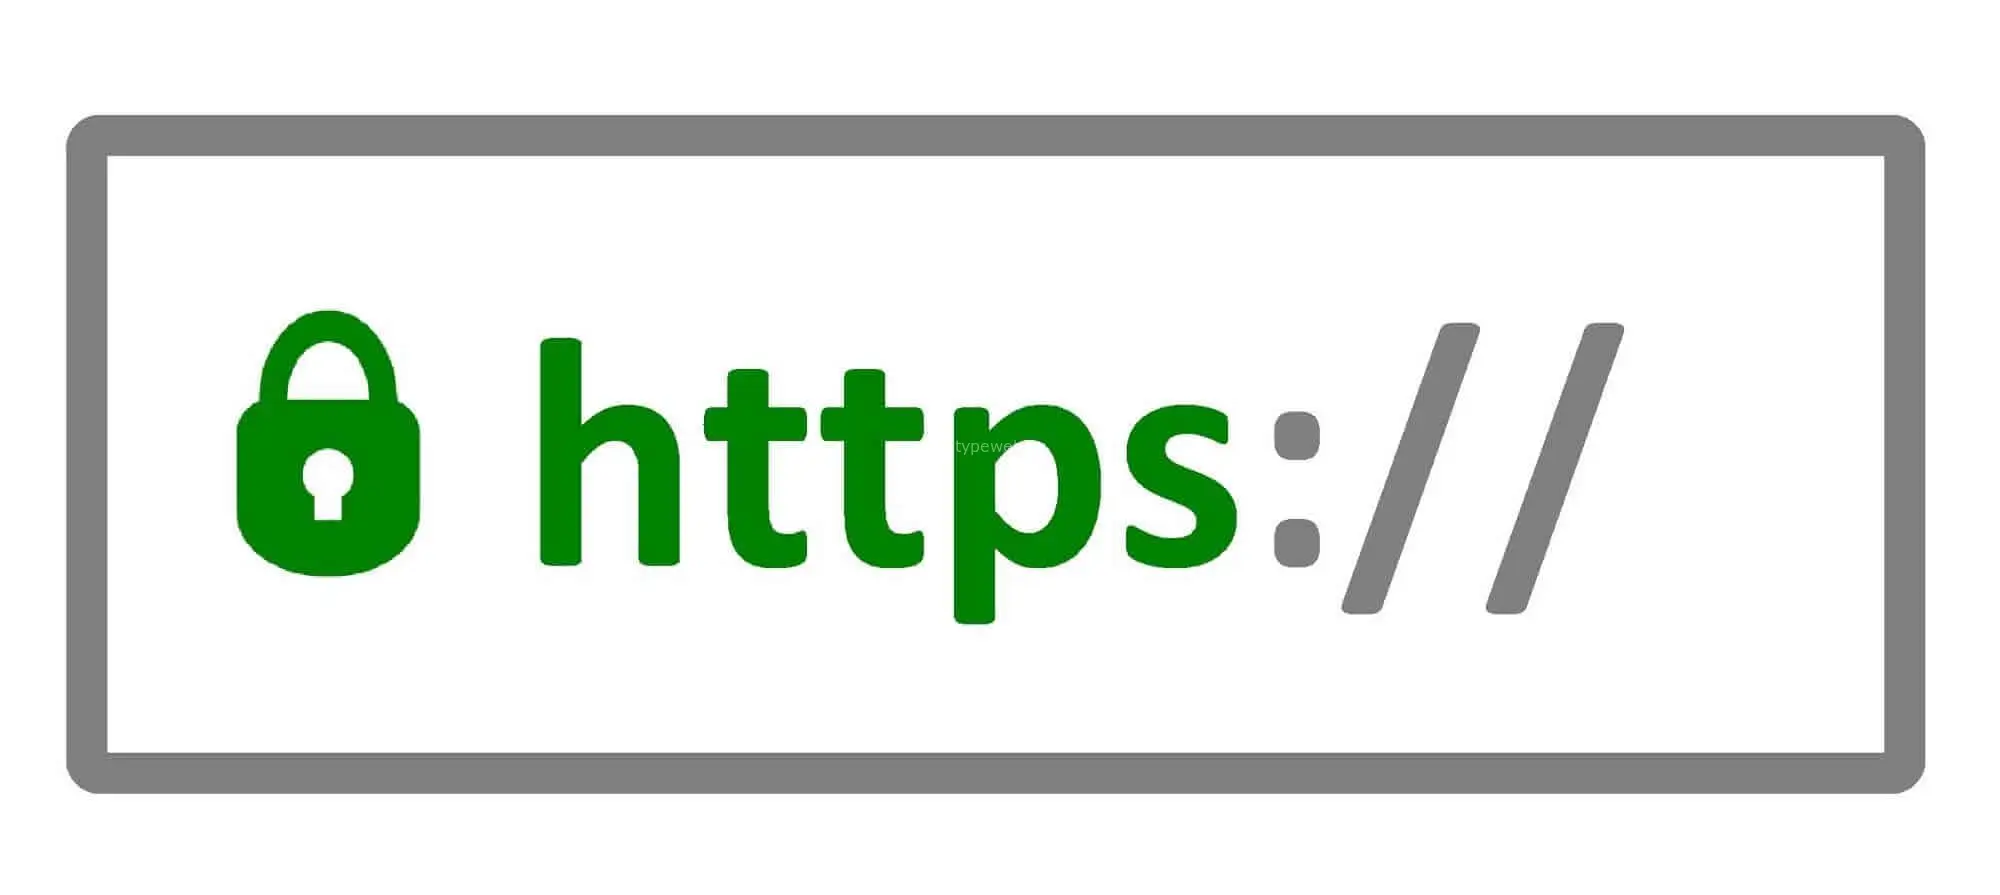 Защита сайта https. SSL сертификат. SSL логотип. Защищенное соединение SSL. Защищенное соединение значок.